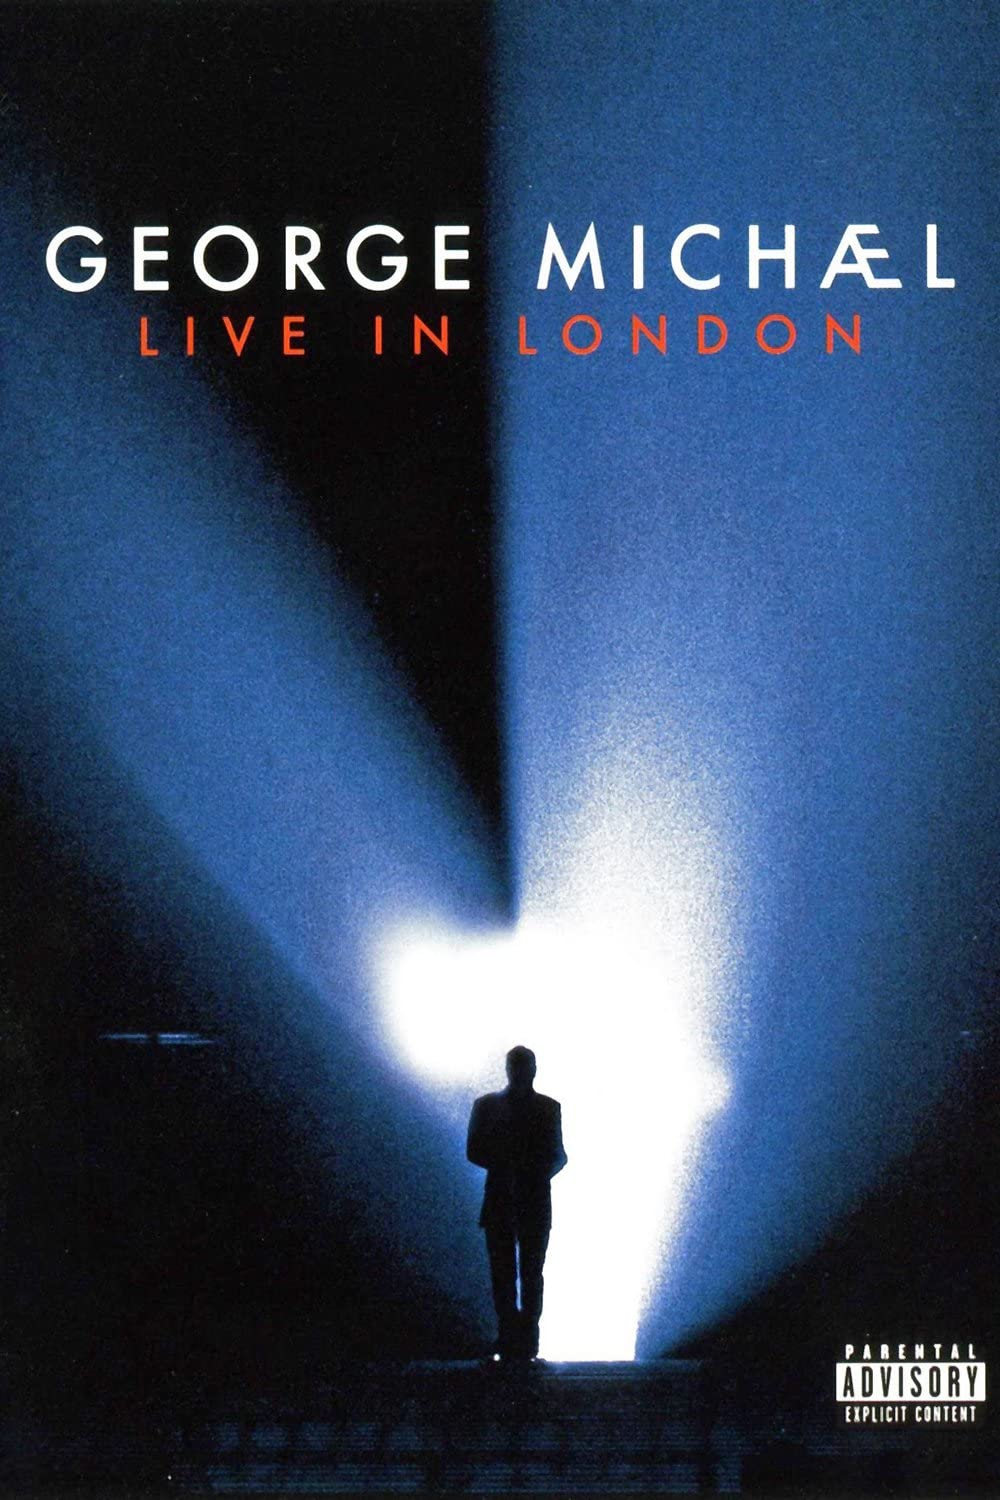 Filmbeschreibung zu George Michael - Live in London